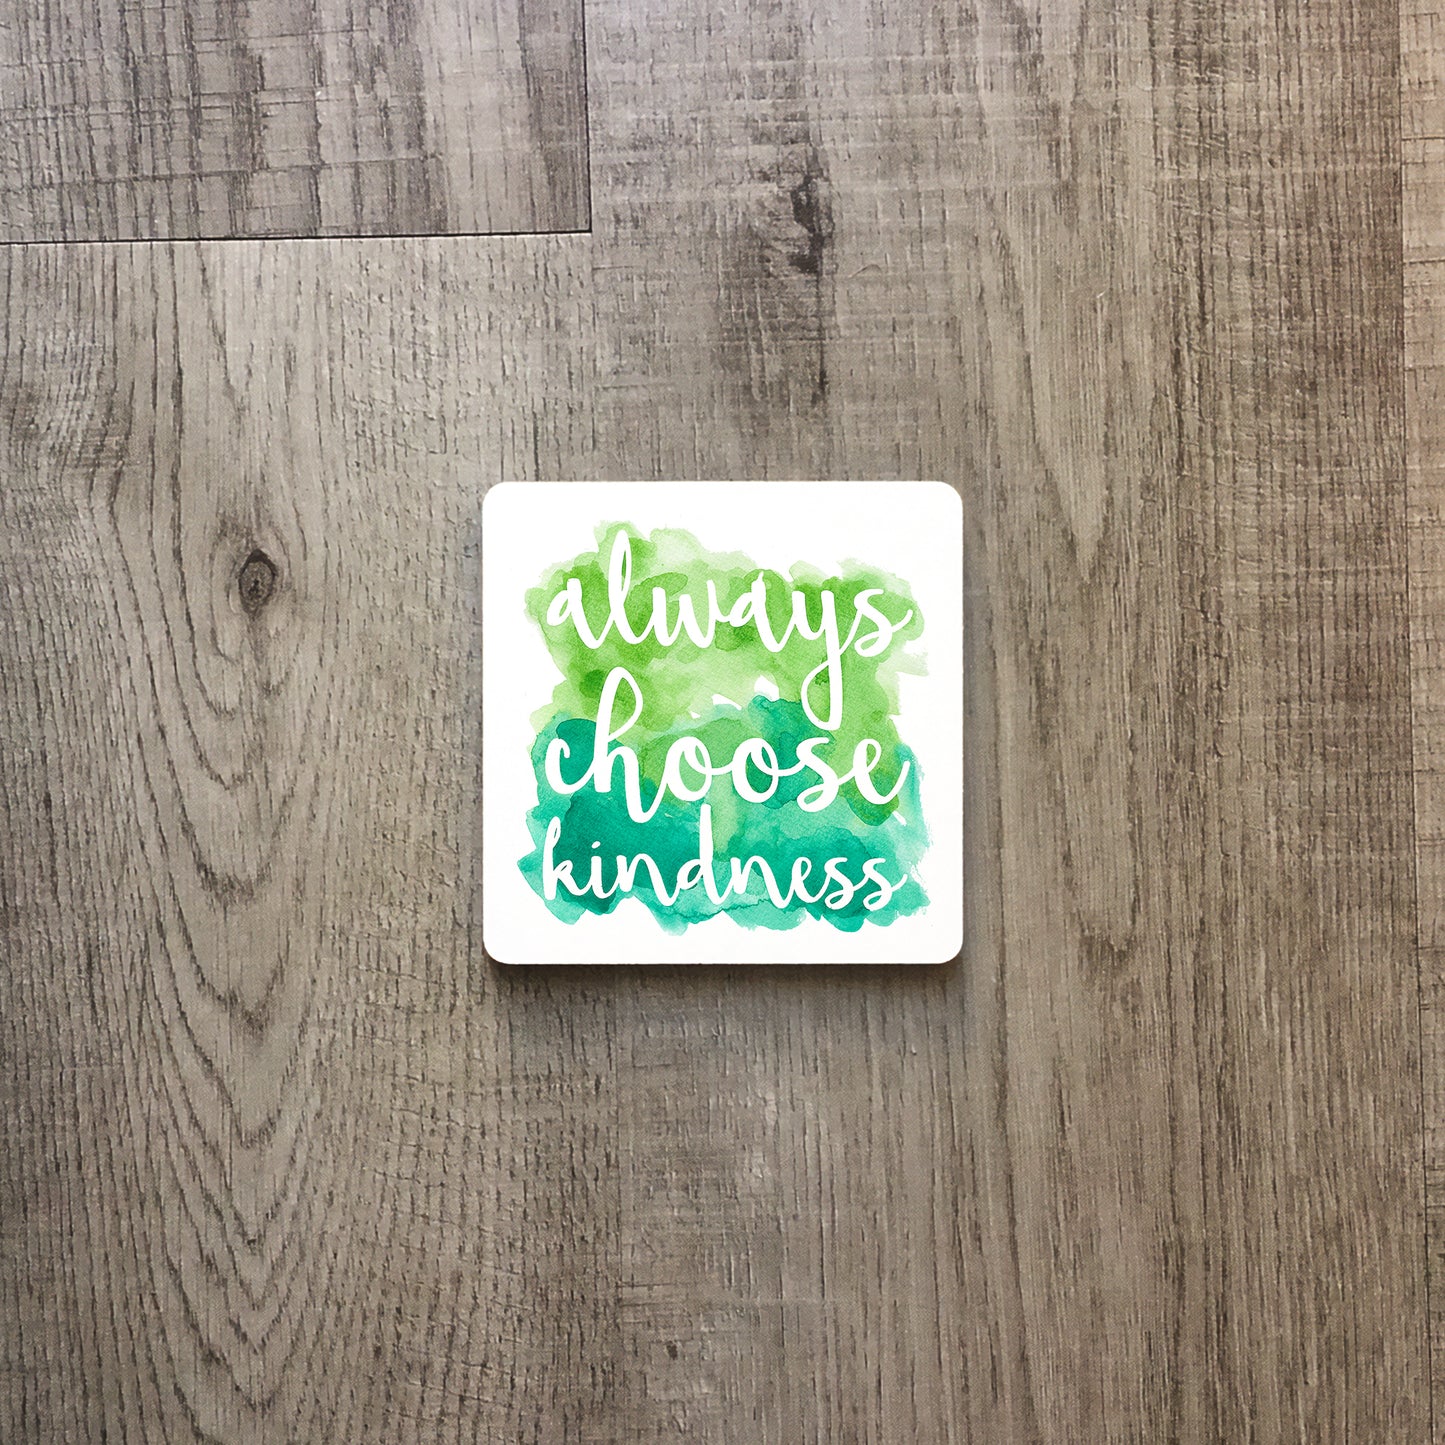 Always choose kindness | Ceramic mug